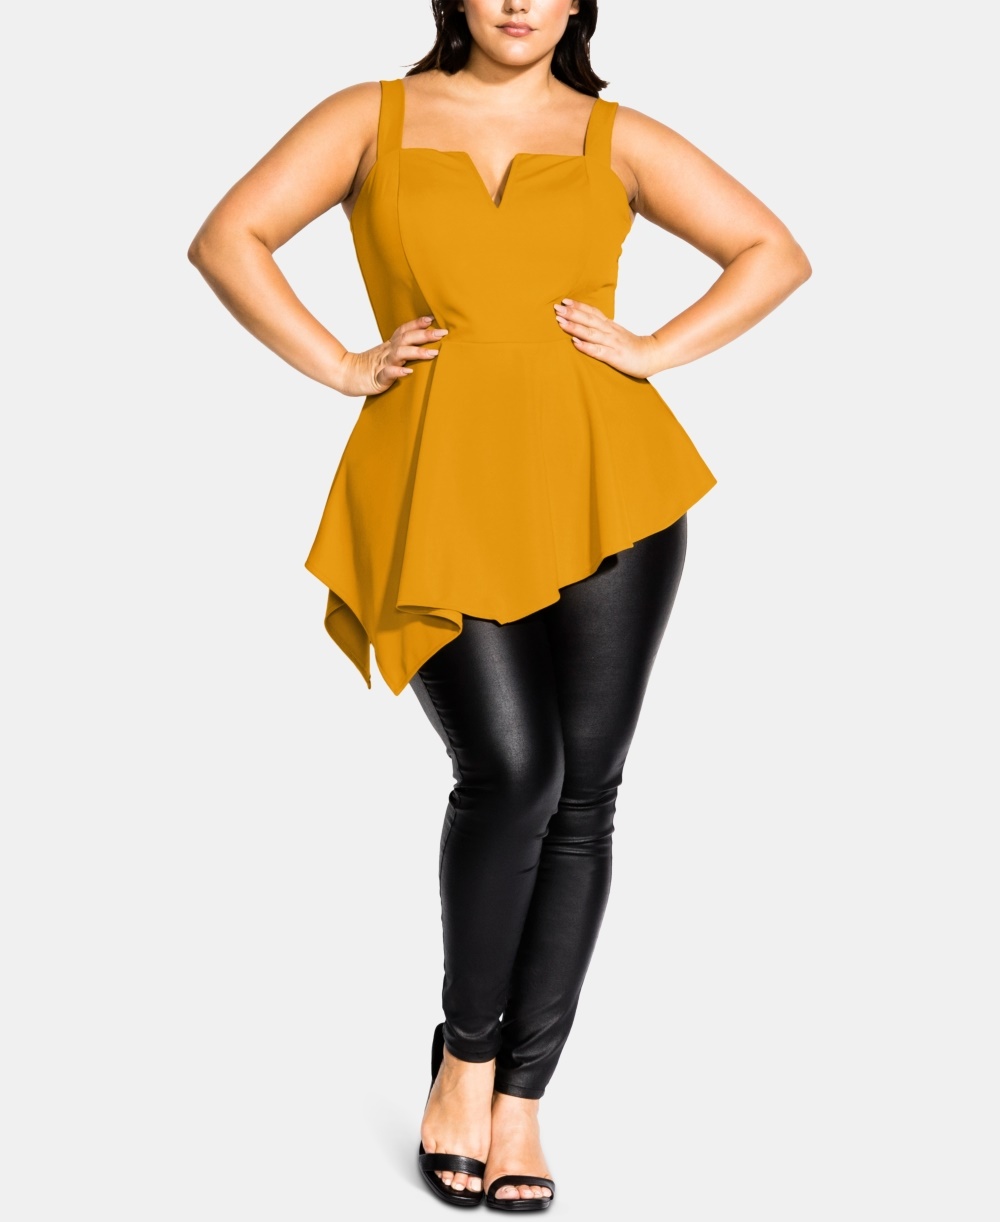 City Chic Women's Trendy Plus Size Peplum Top Yellow XS/14